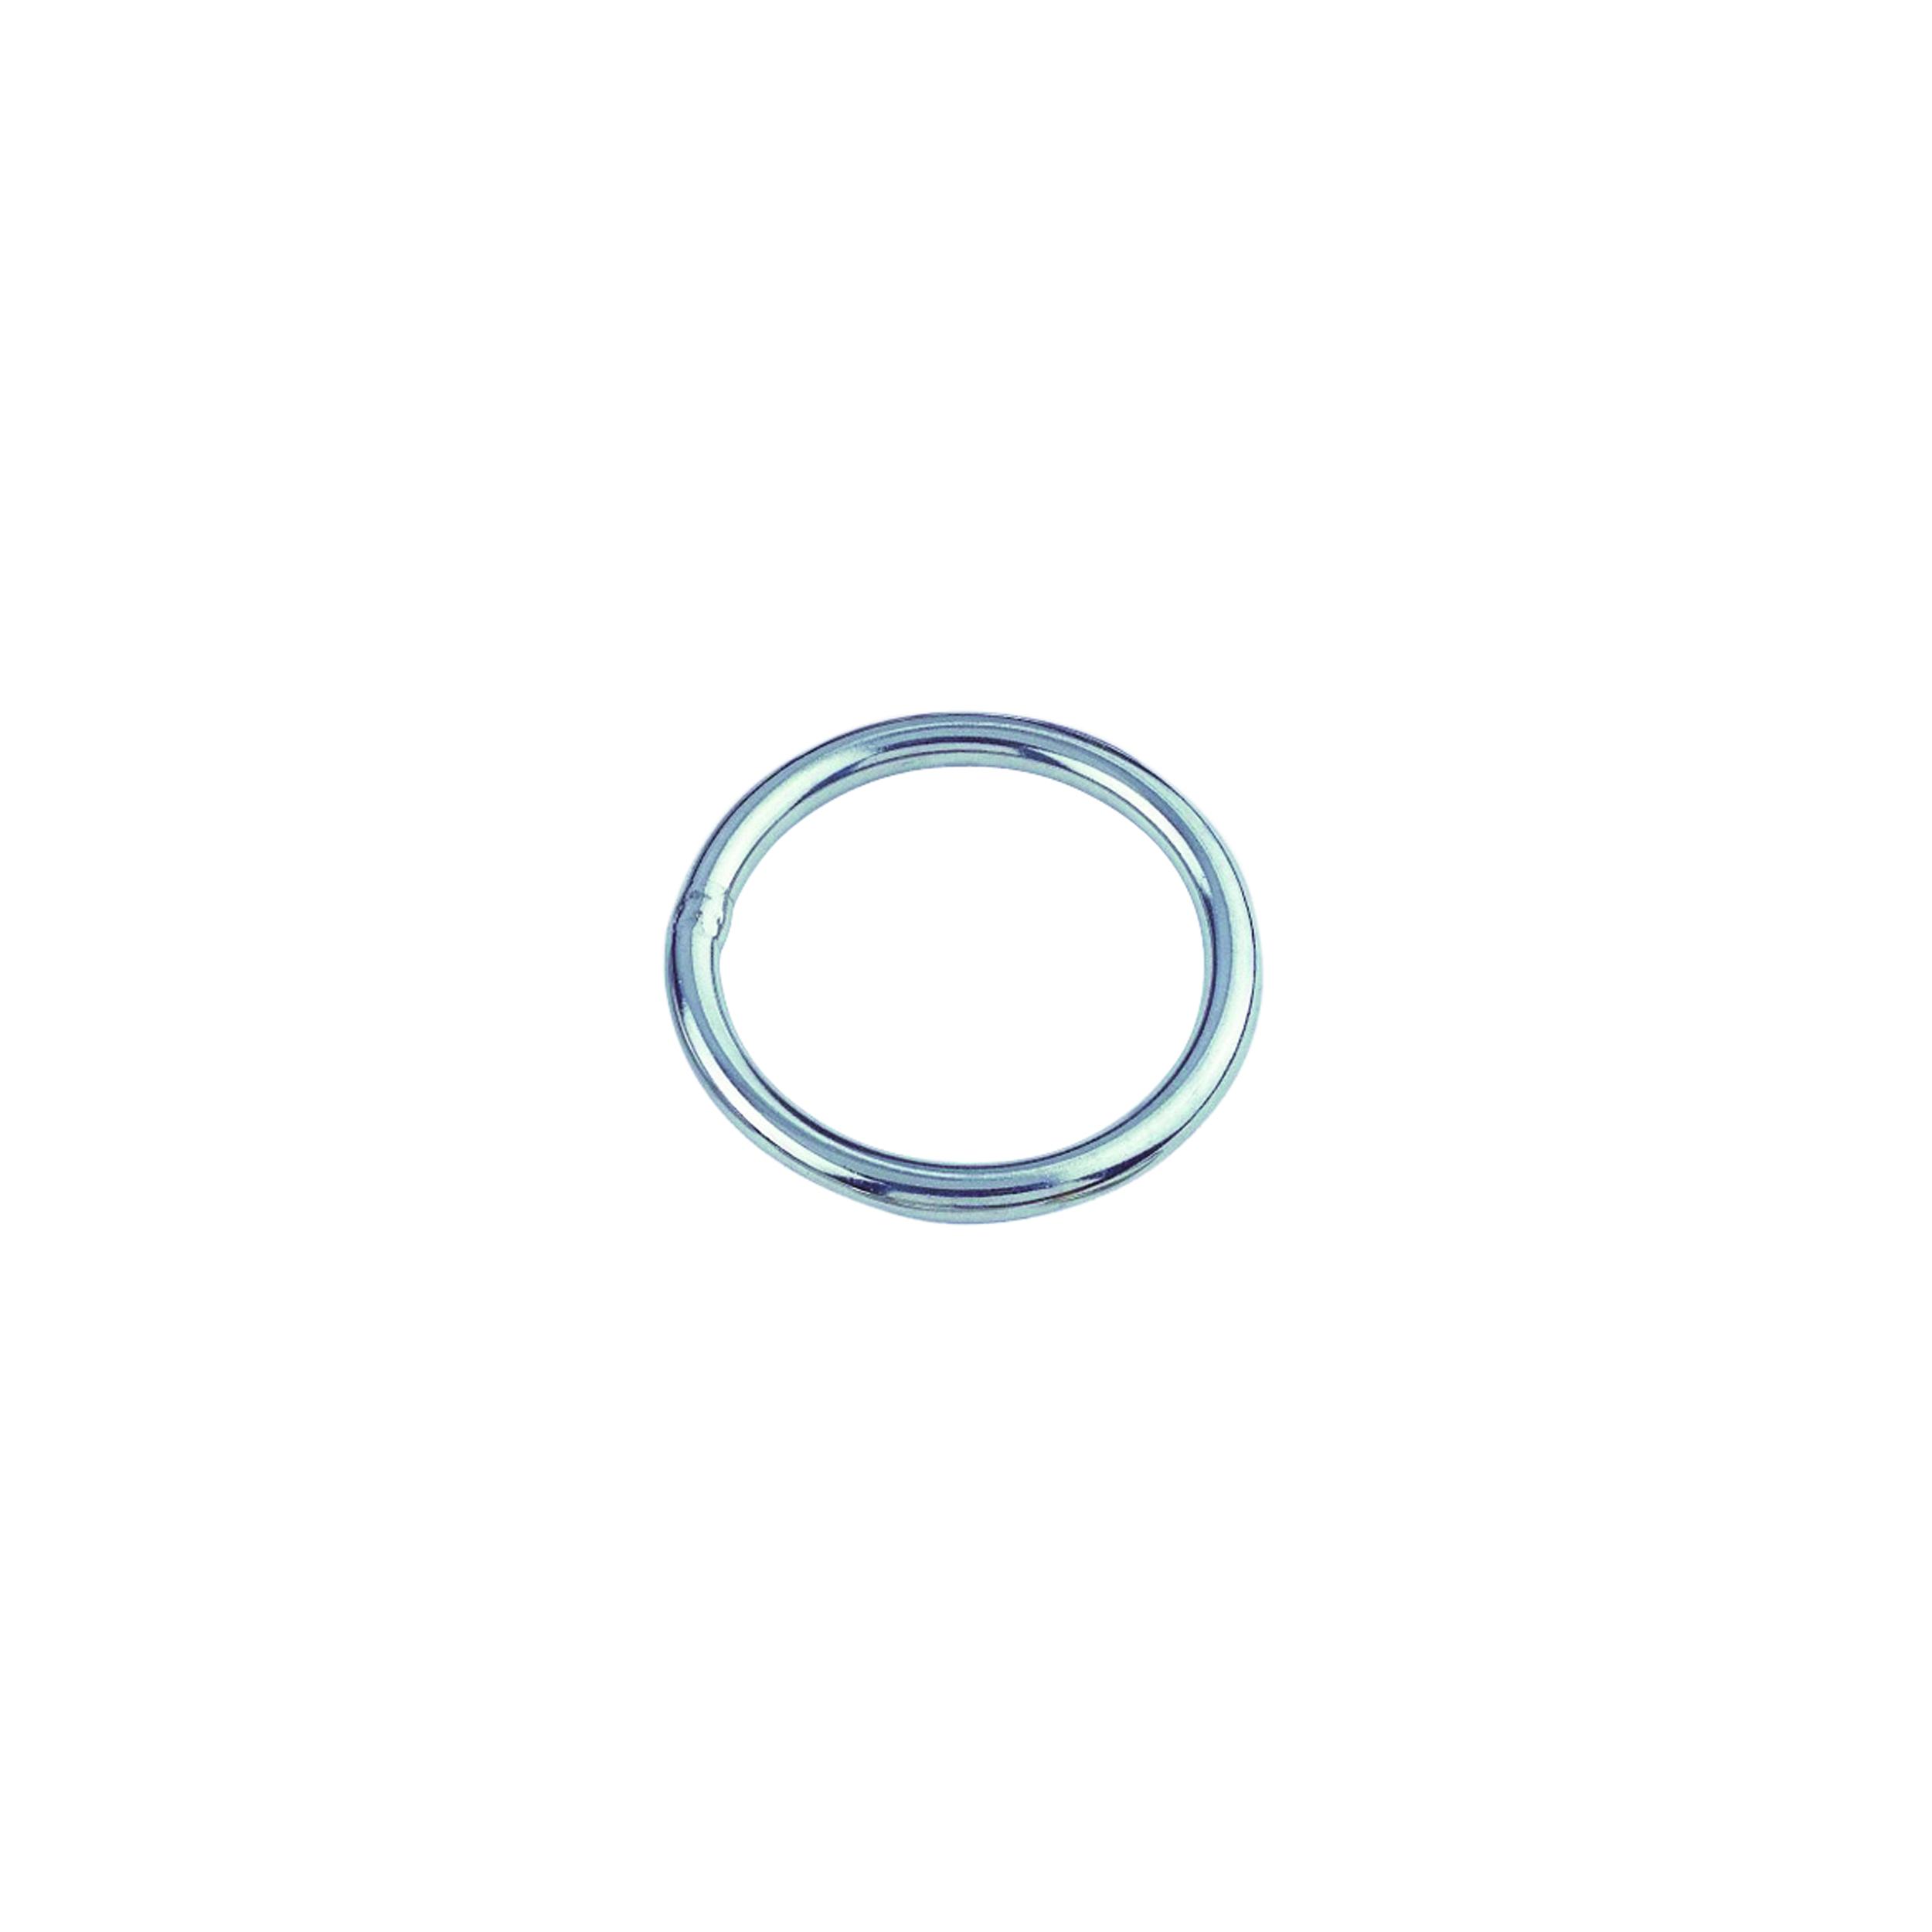 10 STCK / PCS. Ring, round A4  10x50mm